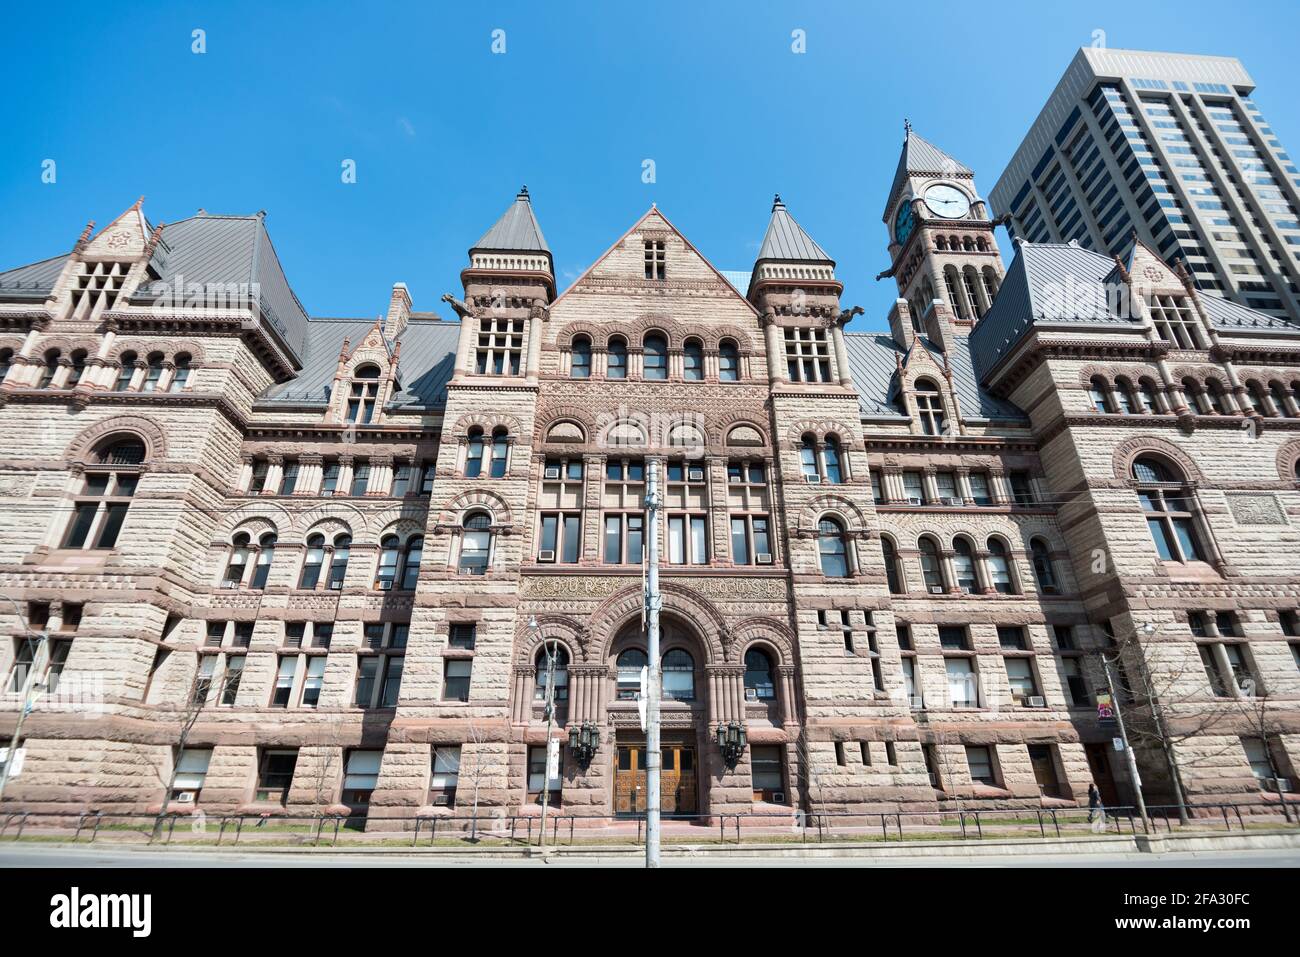 Old City Hall (Toronto) - west facing facade - courts entrance Stock Photo